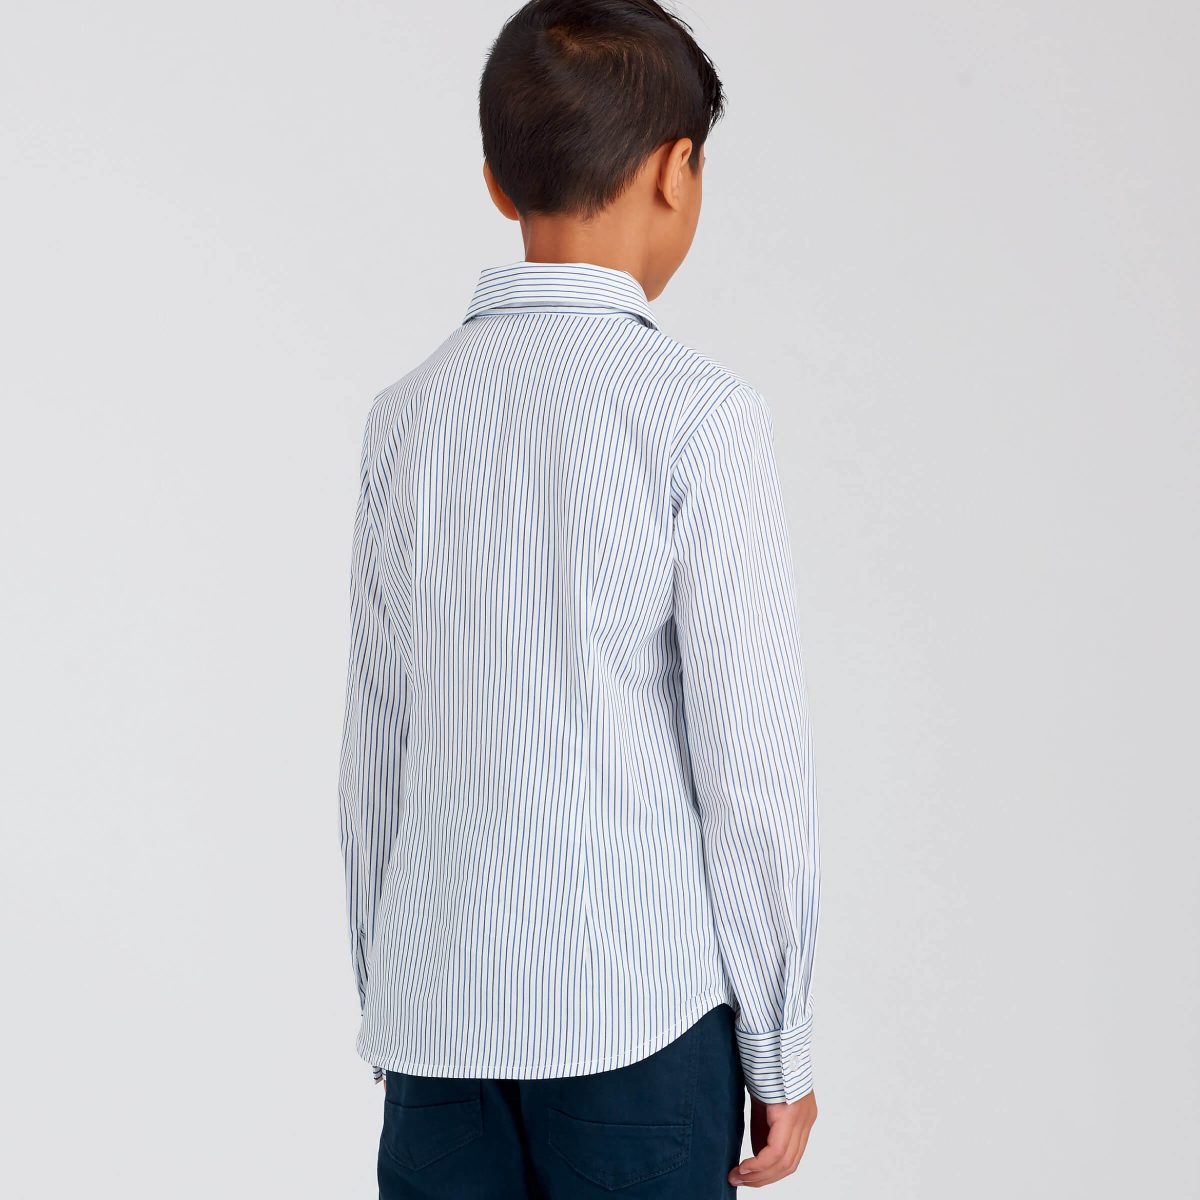 Simplicity Sewing Pattern S9056 Children's & Teen Boys' Shirts